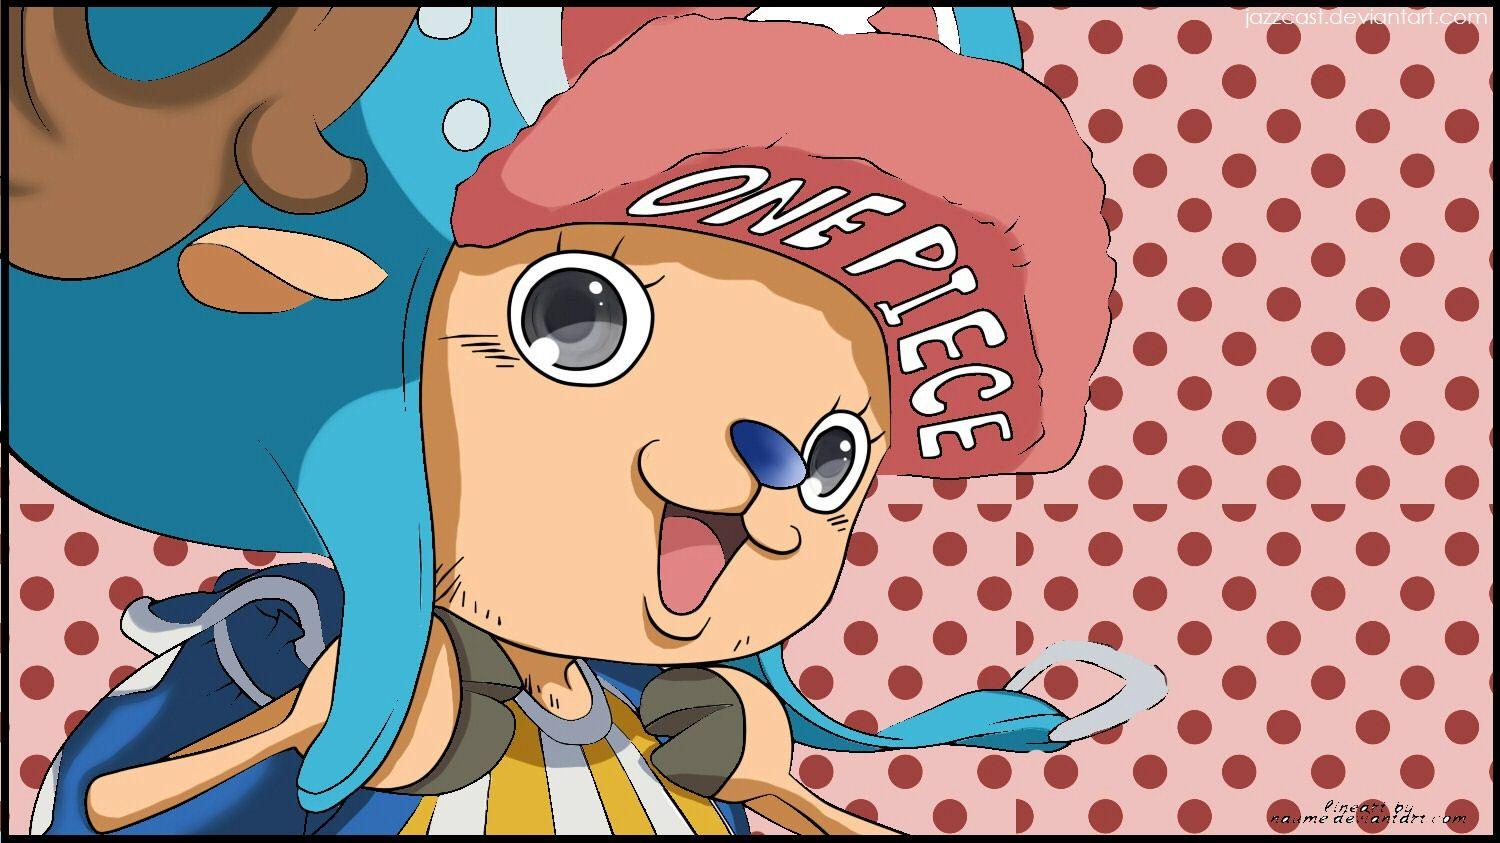 Download 70 Wallpaper One Piece Chopper terbaru 2019